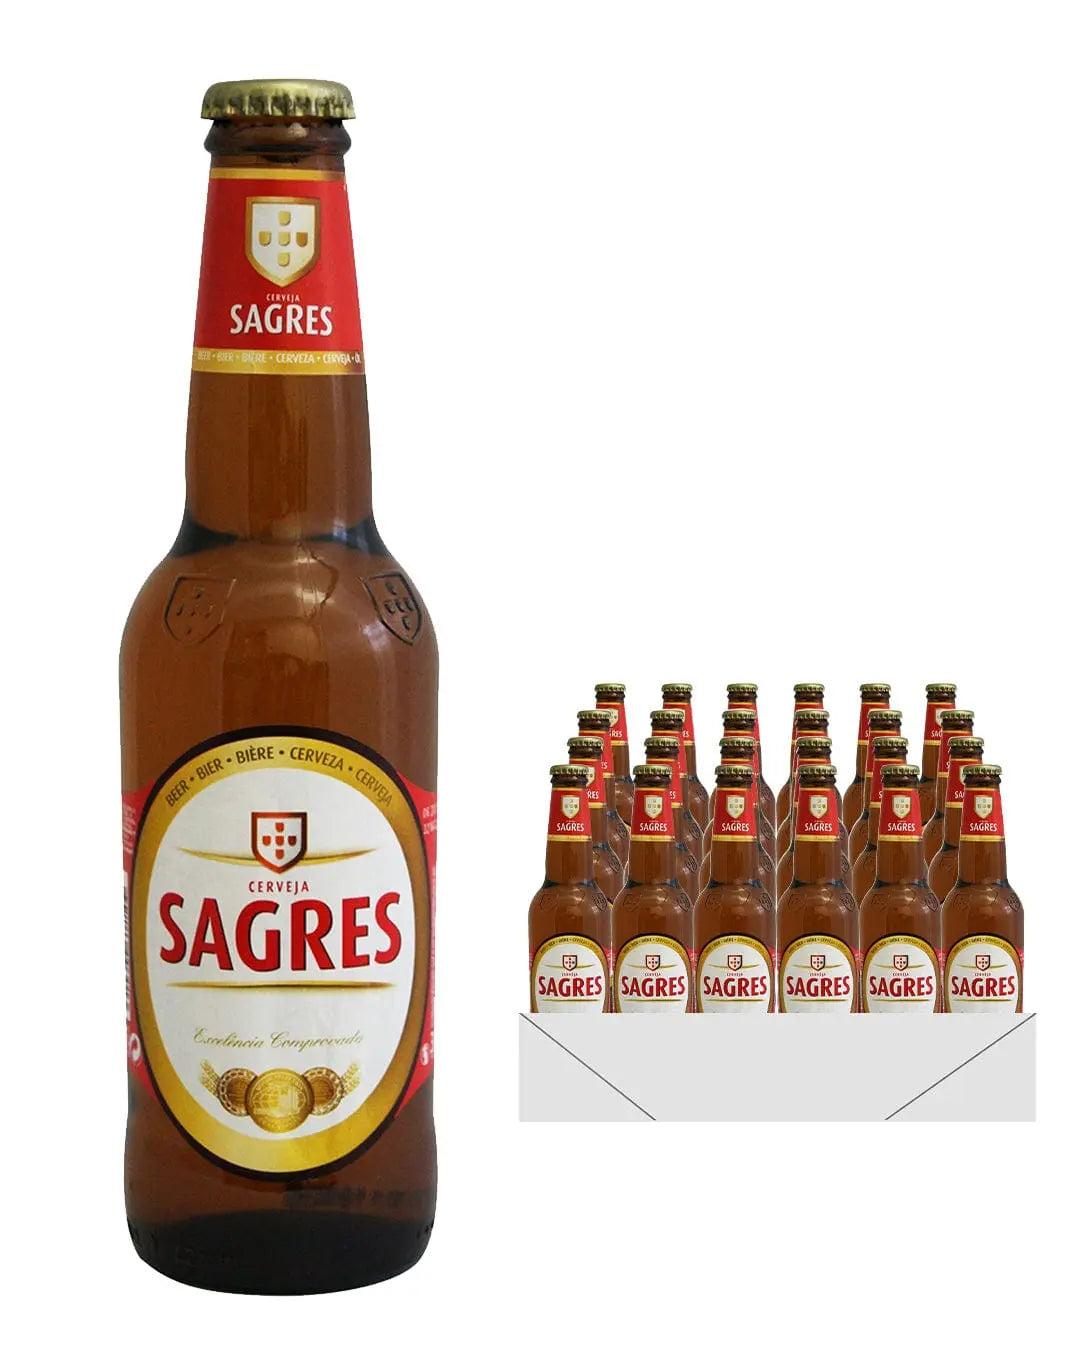 Sagres Premium Lager Beer Bottle Multipack, 24 x 330 ml Beer